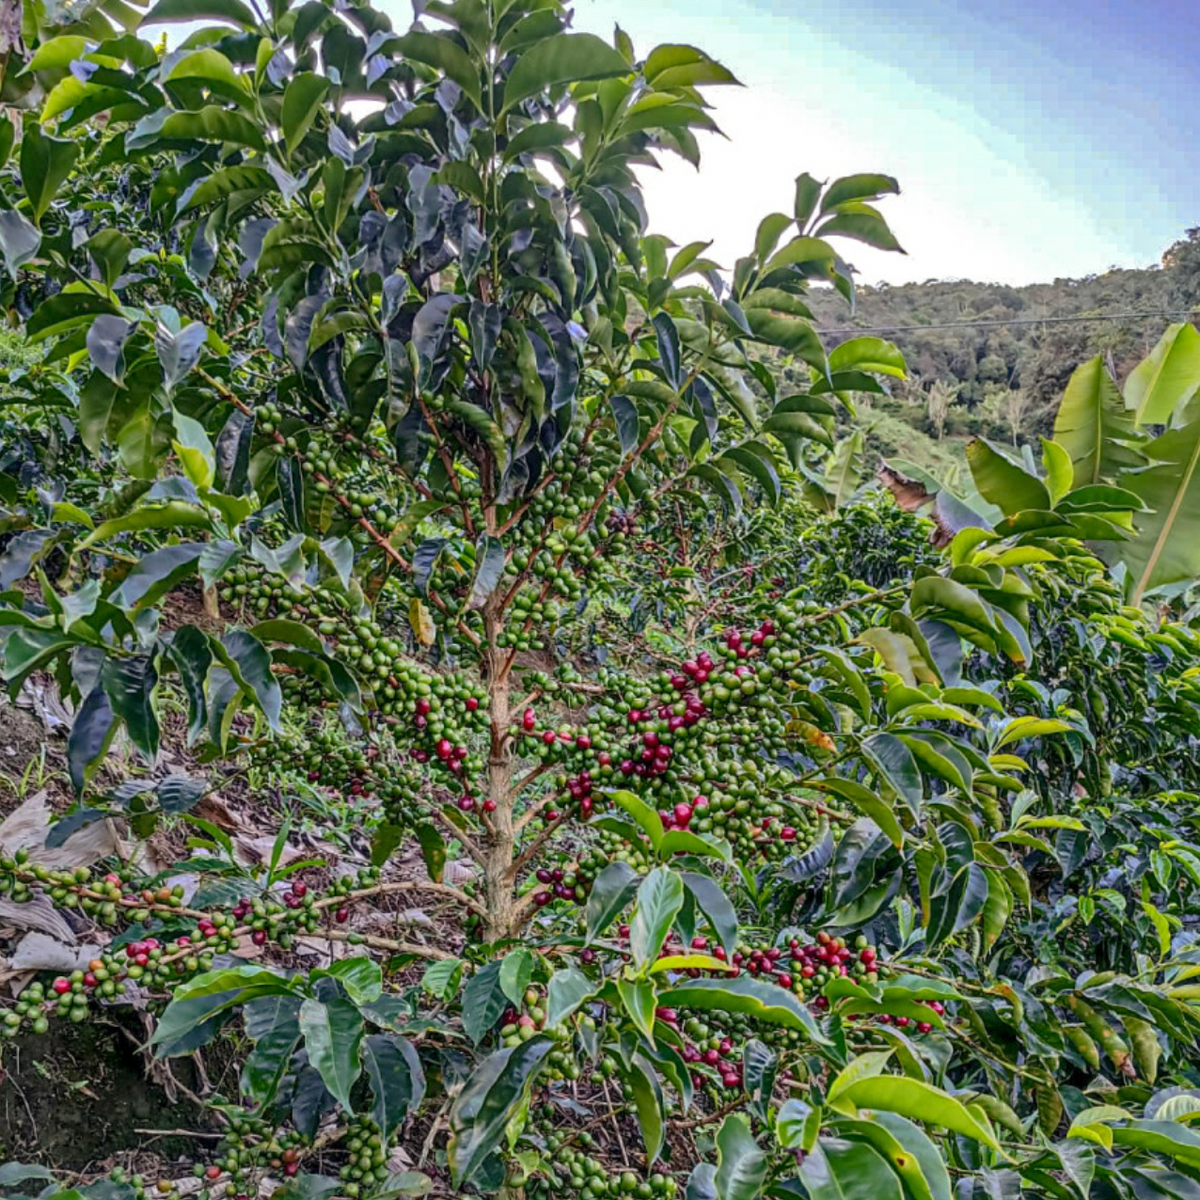 Colombian coffee plant full of ripe coffee cherries.